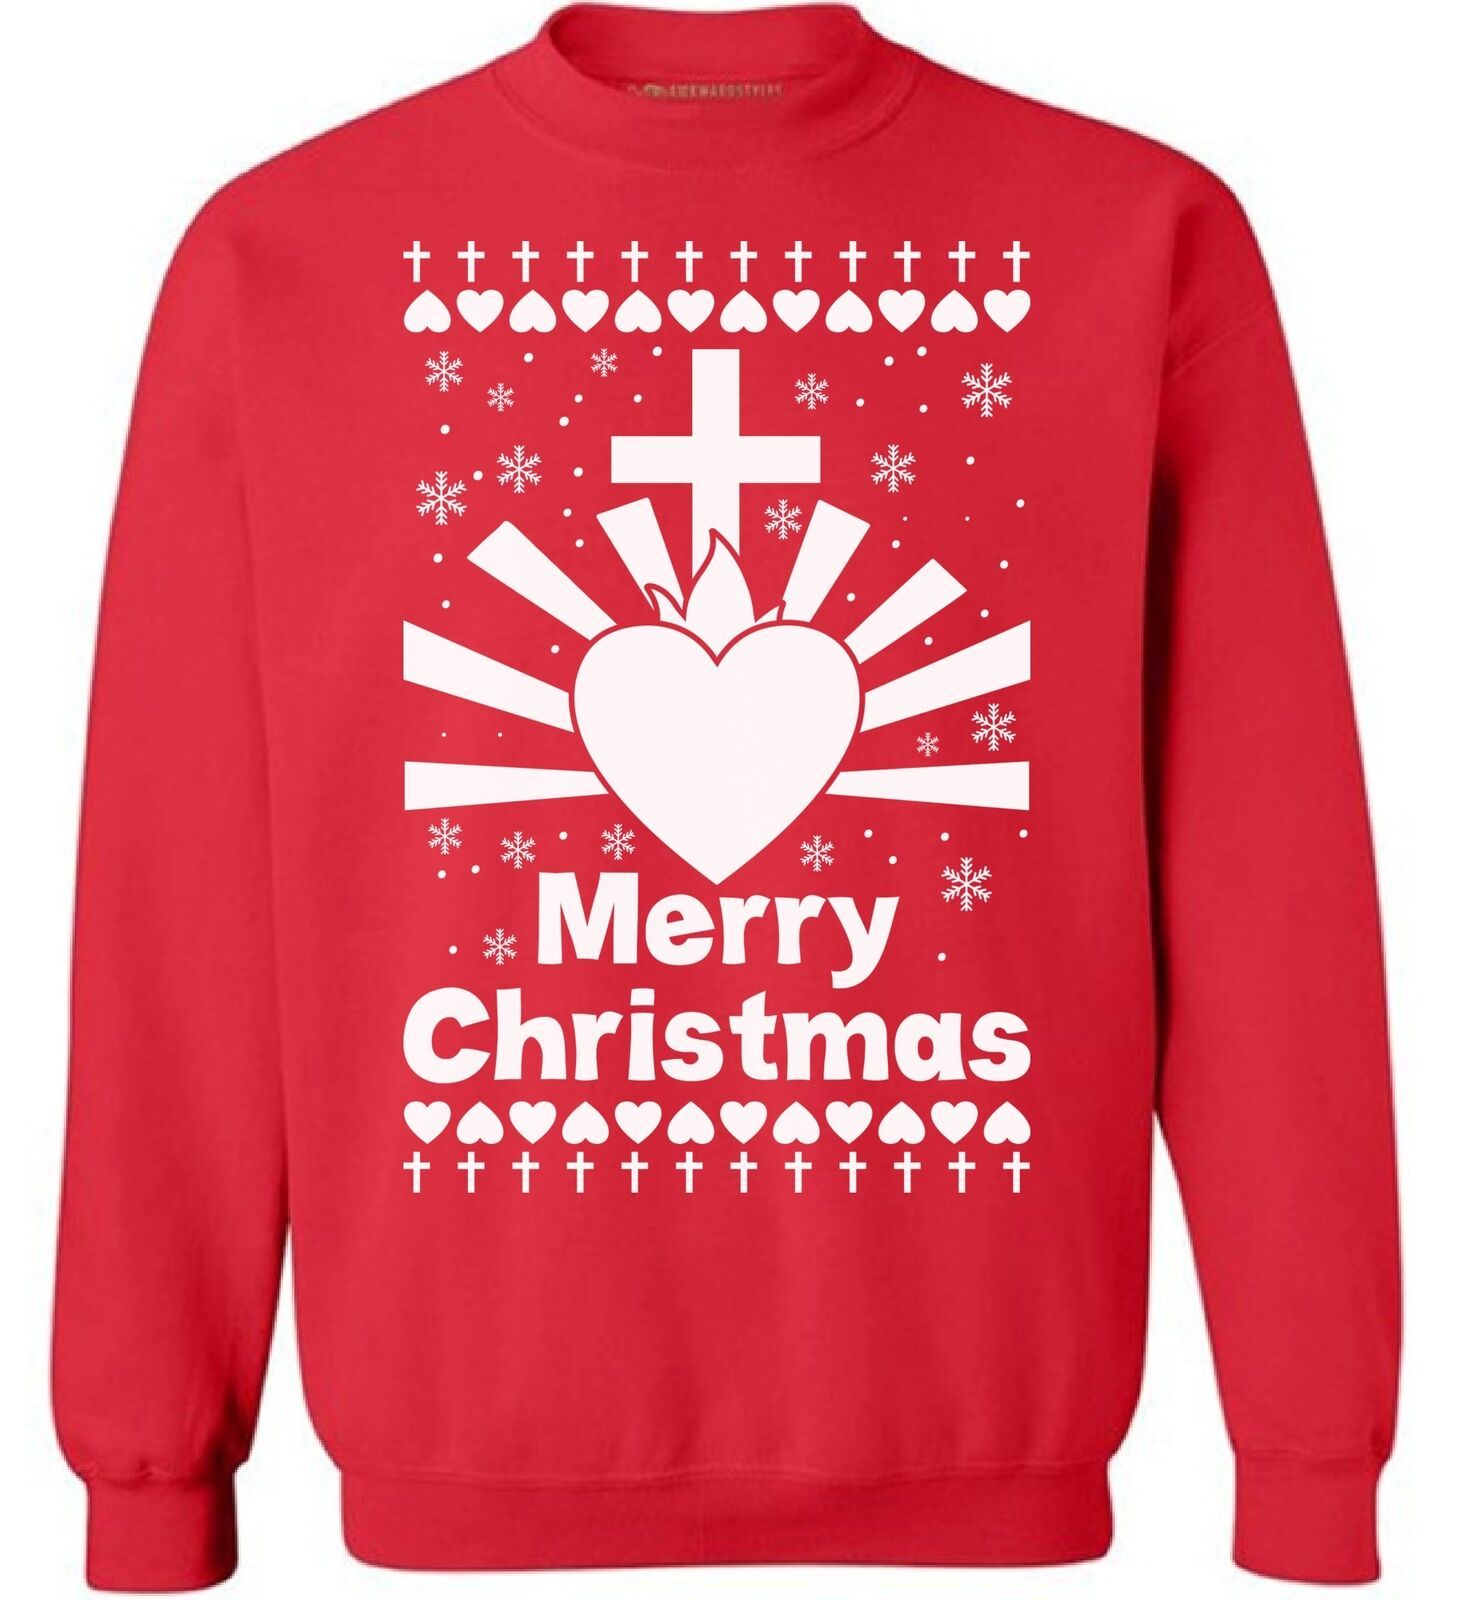 Merry Christmas Jesus Love Jesus With All My Heart Sweatshirt Style: Sweatshirt, Color: Red